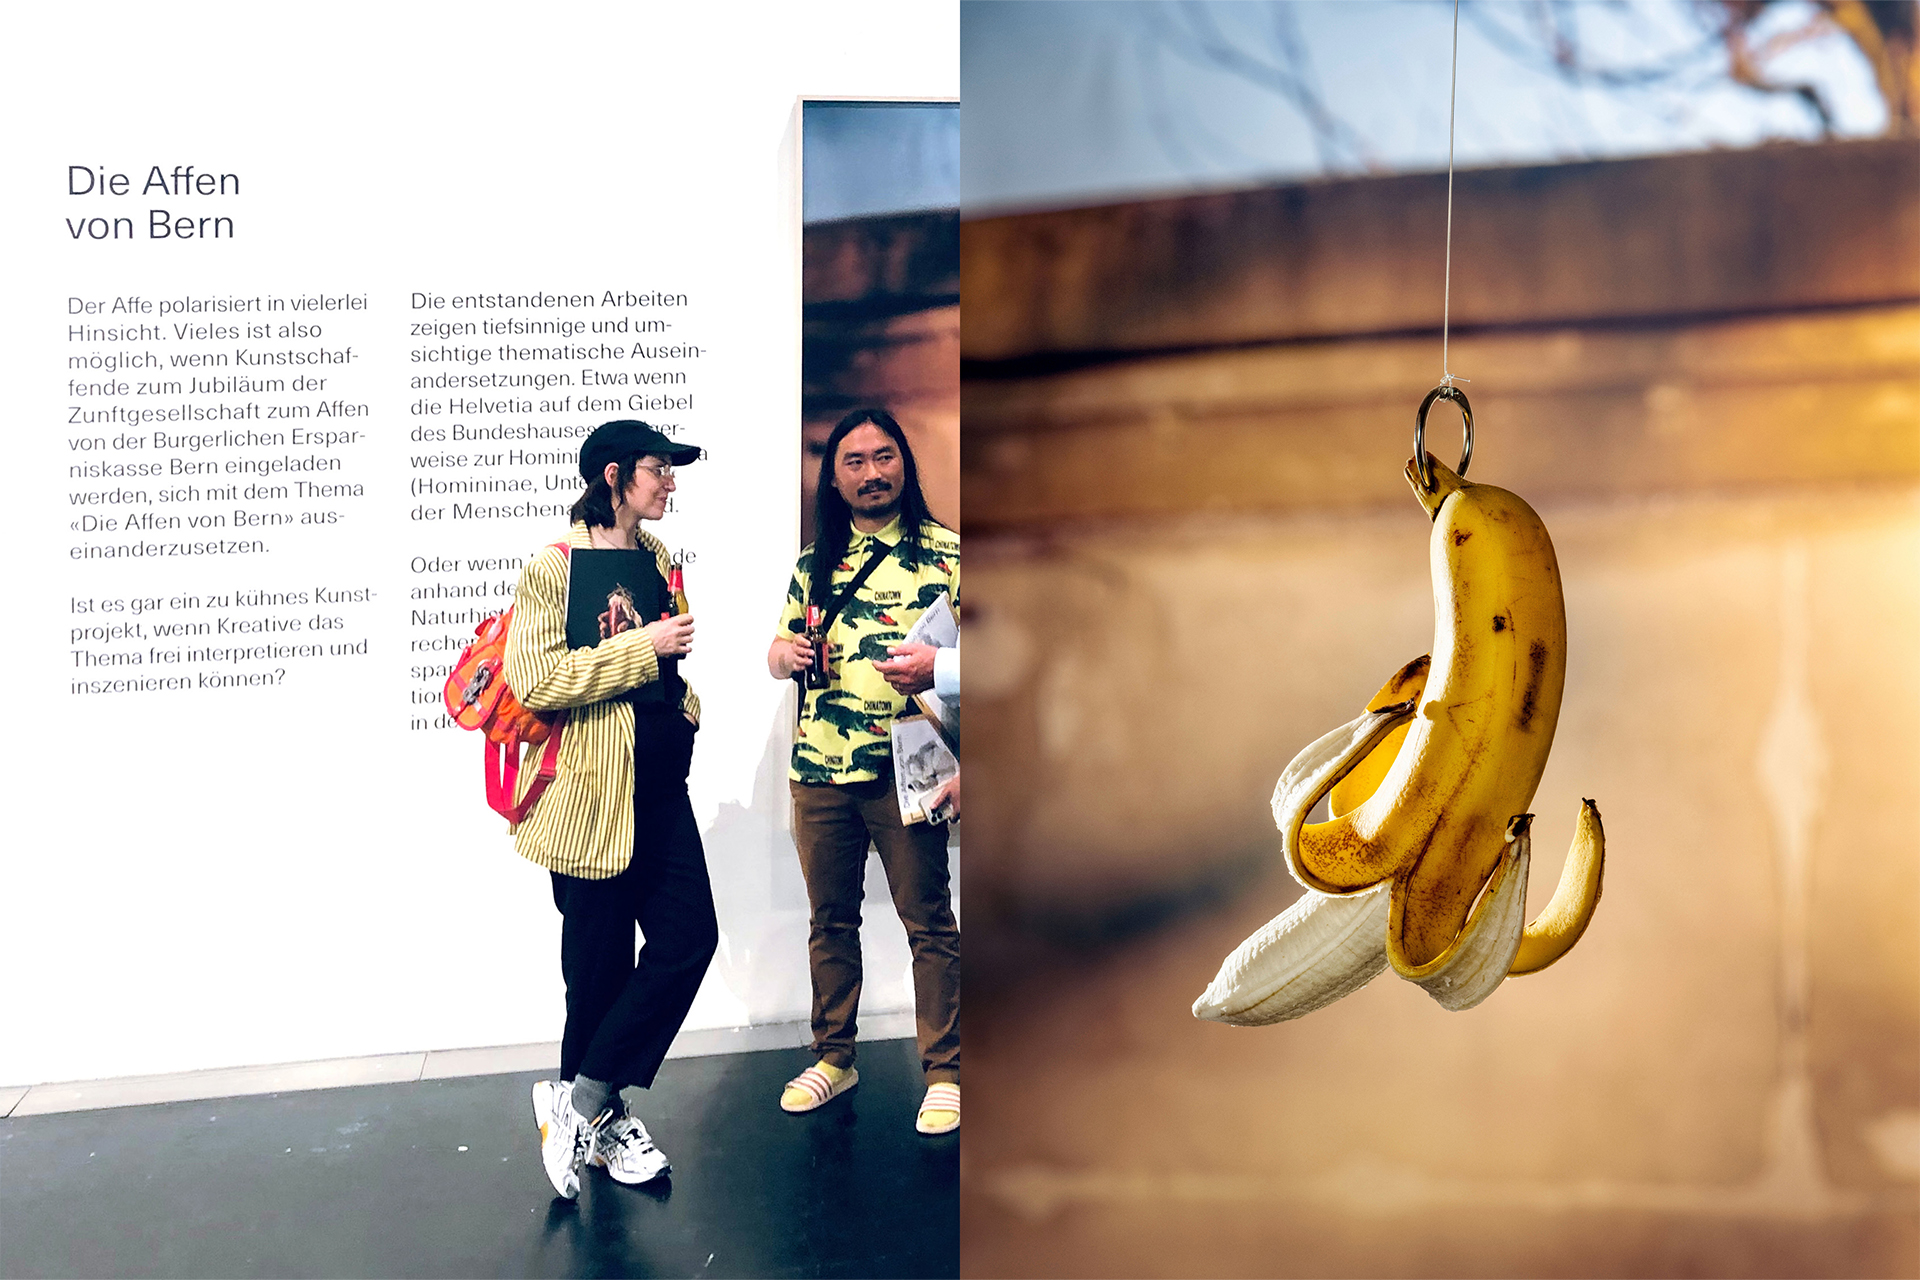 [Translate to English:] BEK Ausstellung & Bild banane